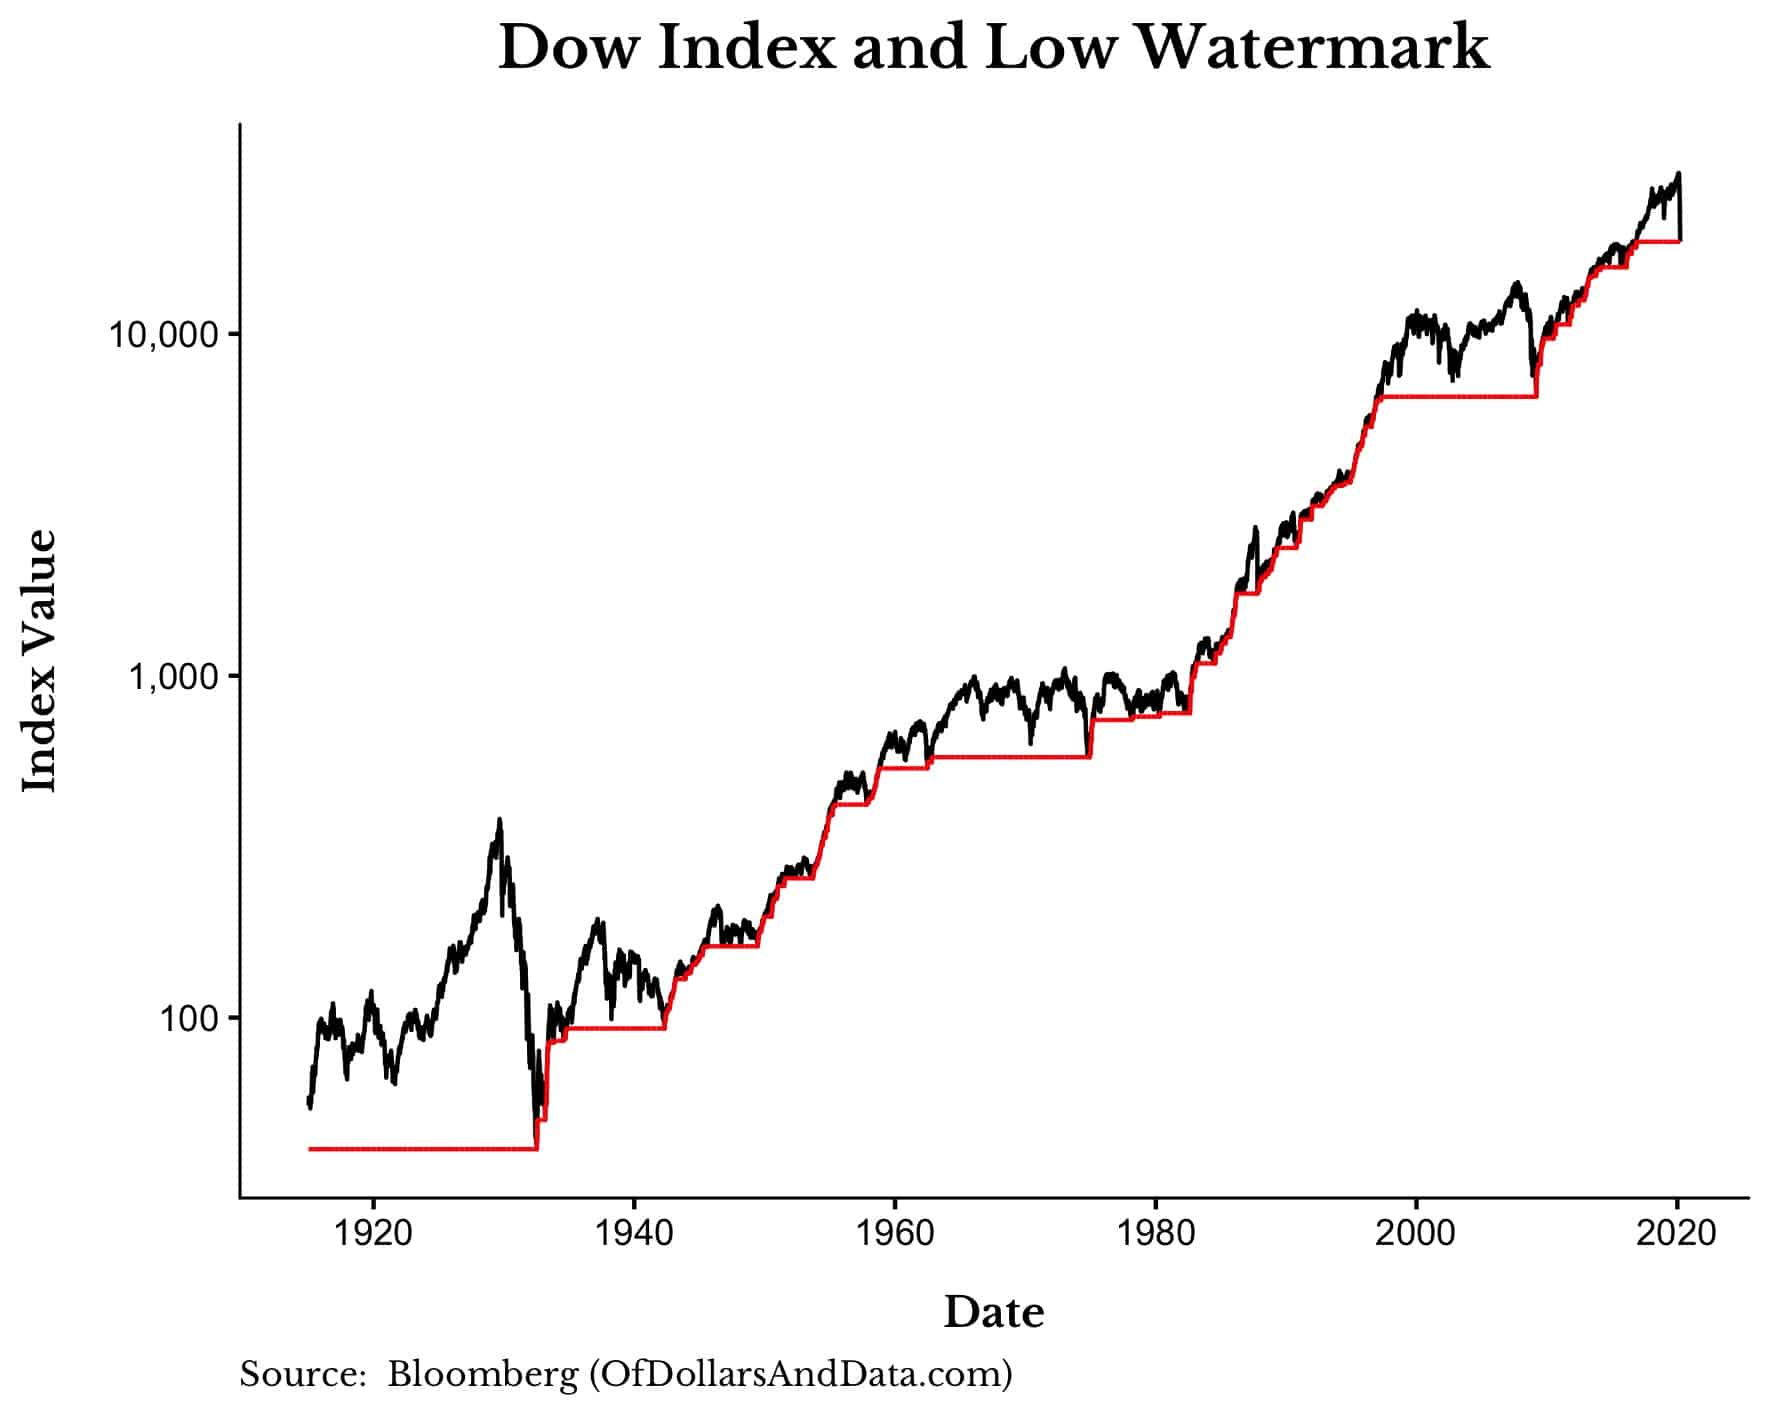 Dow Jones Industrial Average and its low watermark.